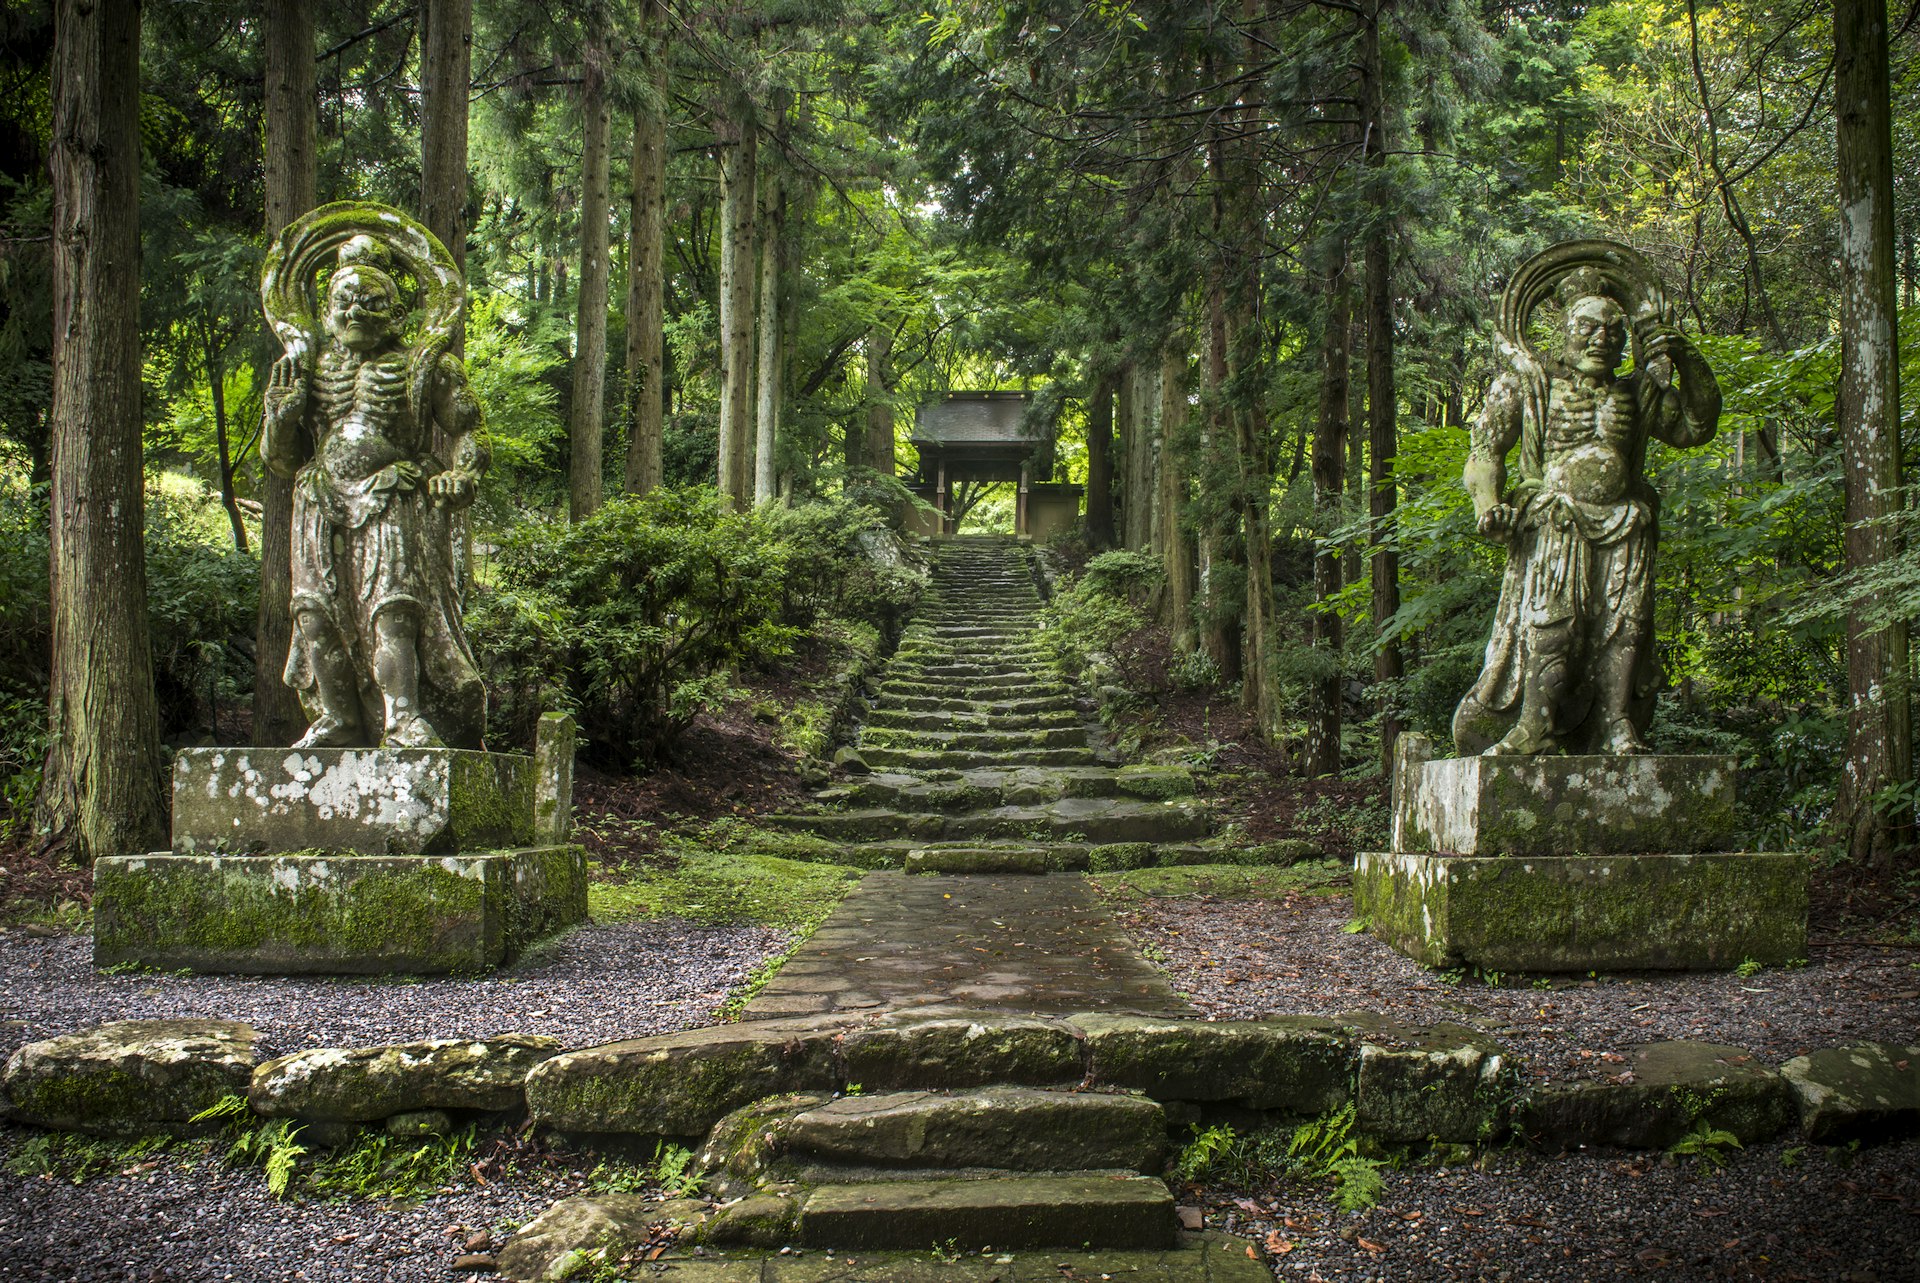 Features - Futagoji Temple, Kunisaki Peninsula, Japan